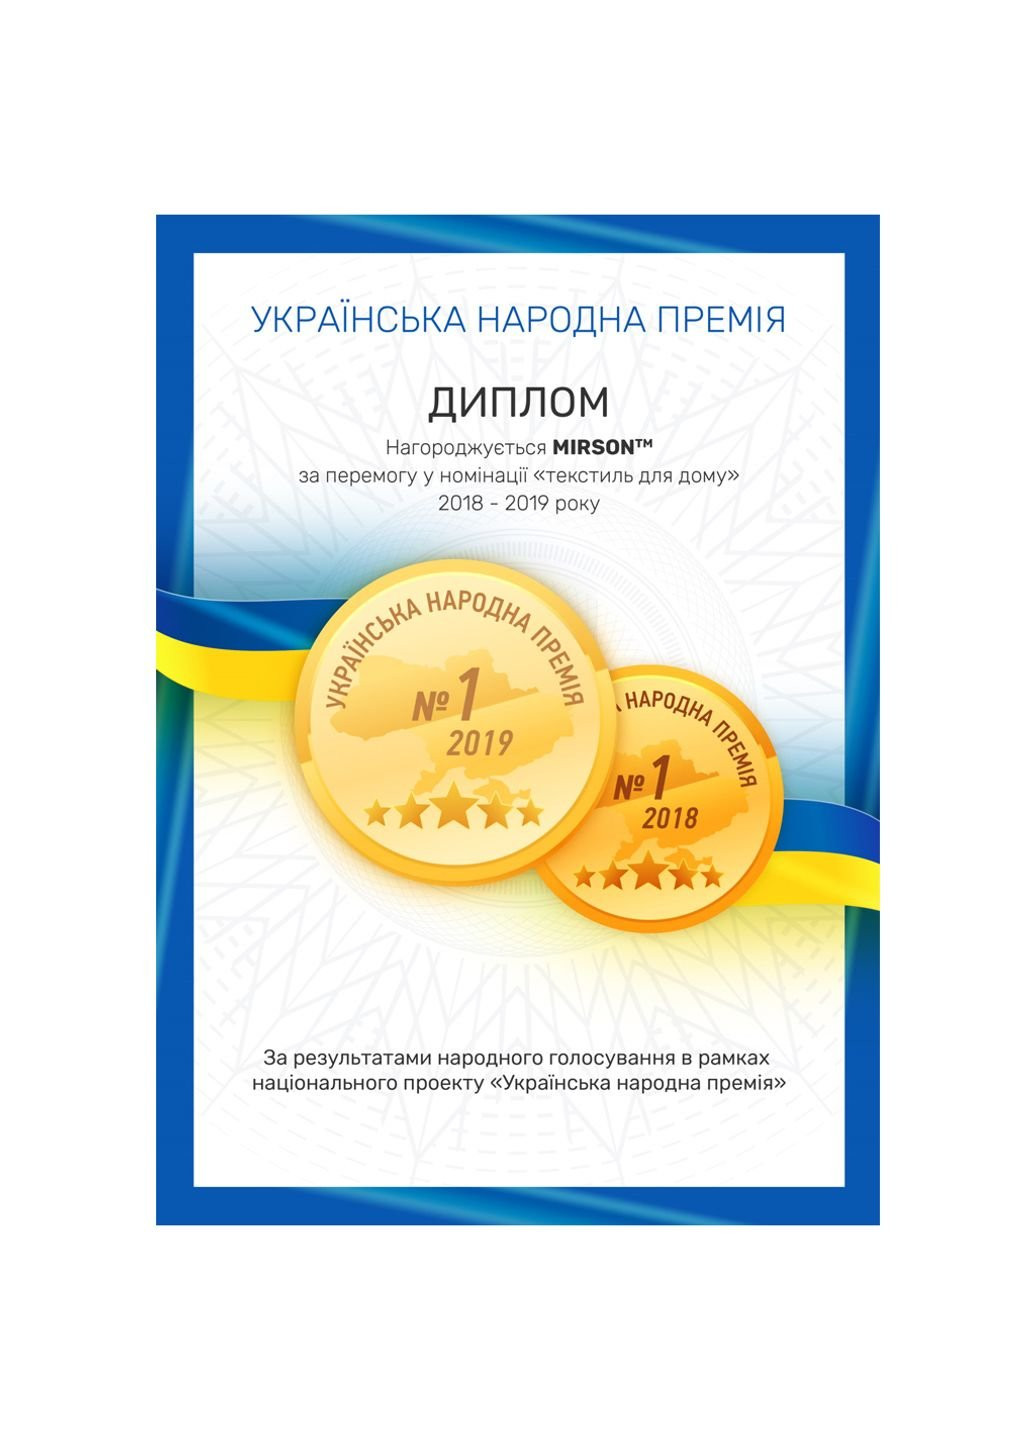 No Brand полотенце mirson банное №5011 softness plum 100x150 см (2200003181296) малиновый производство - Украина